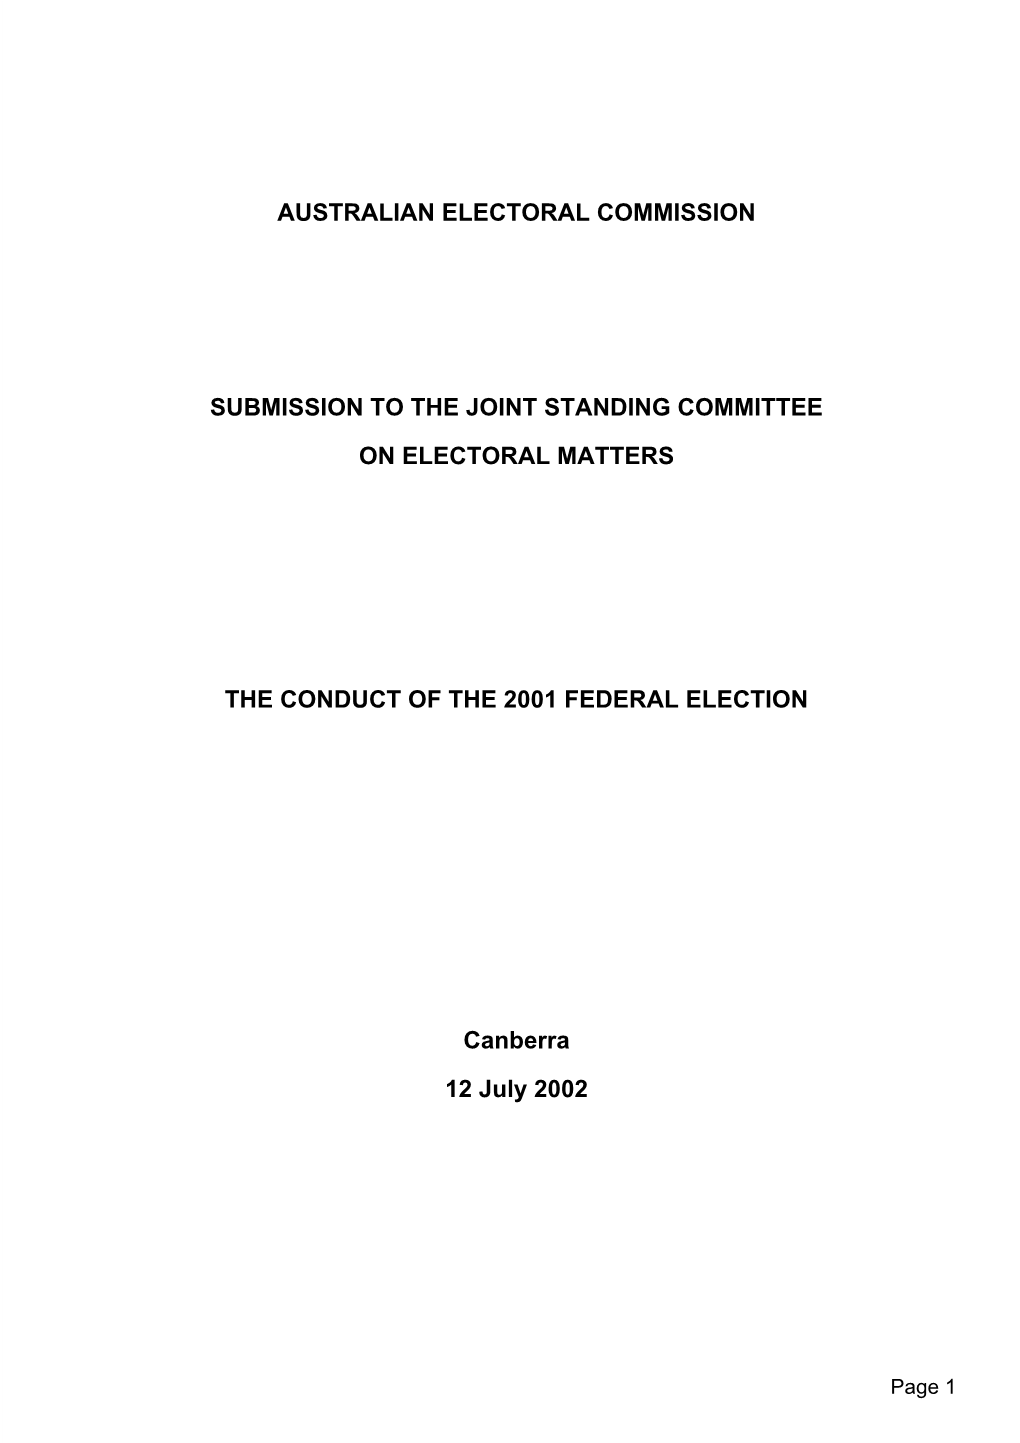 Australian Electoral Commission